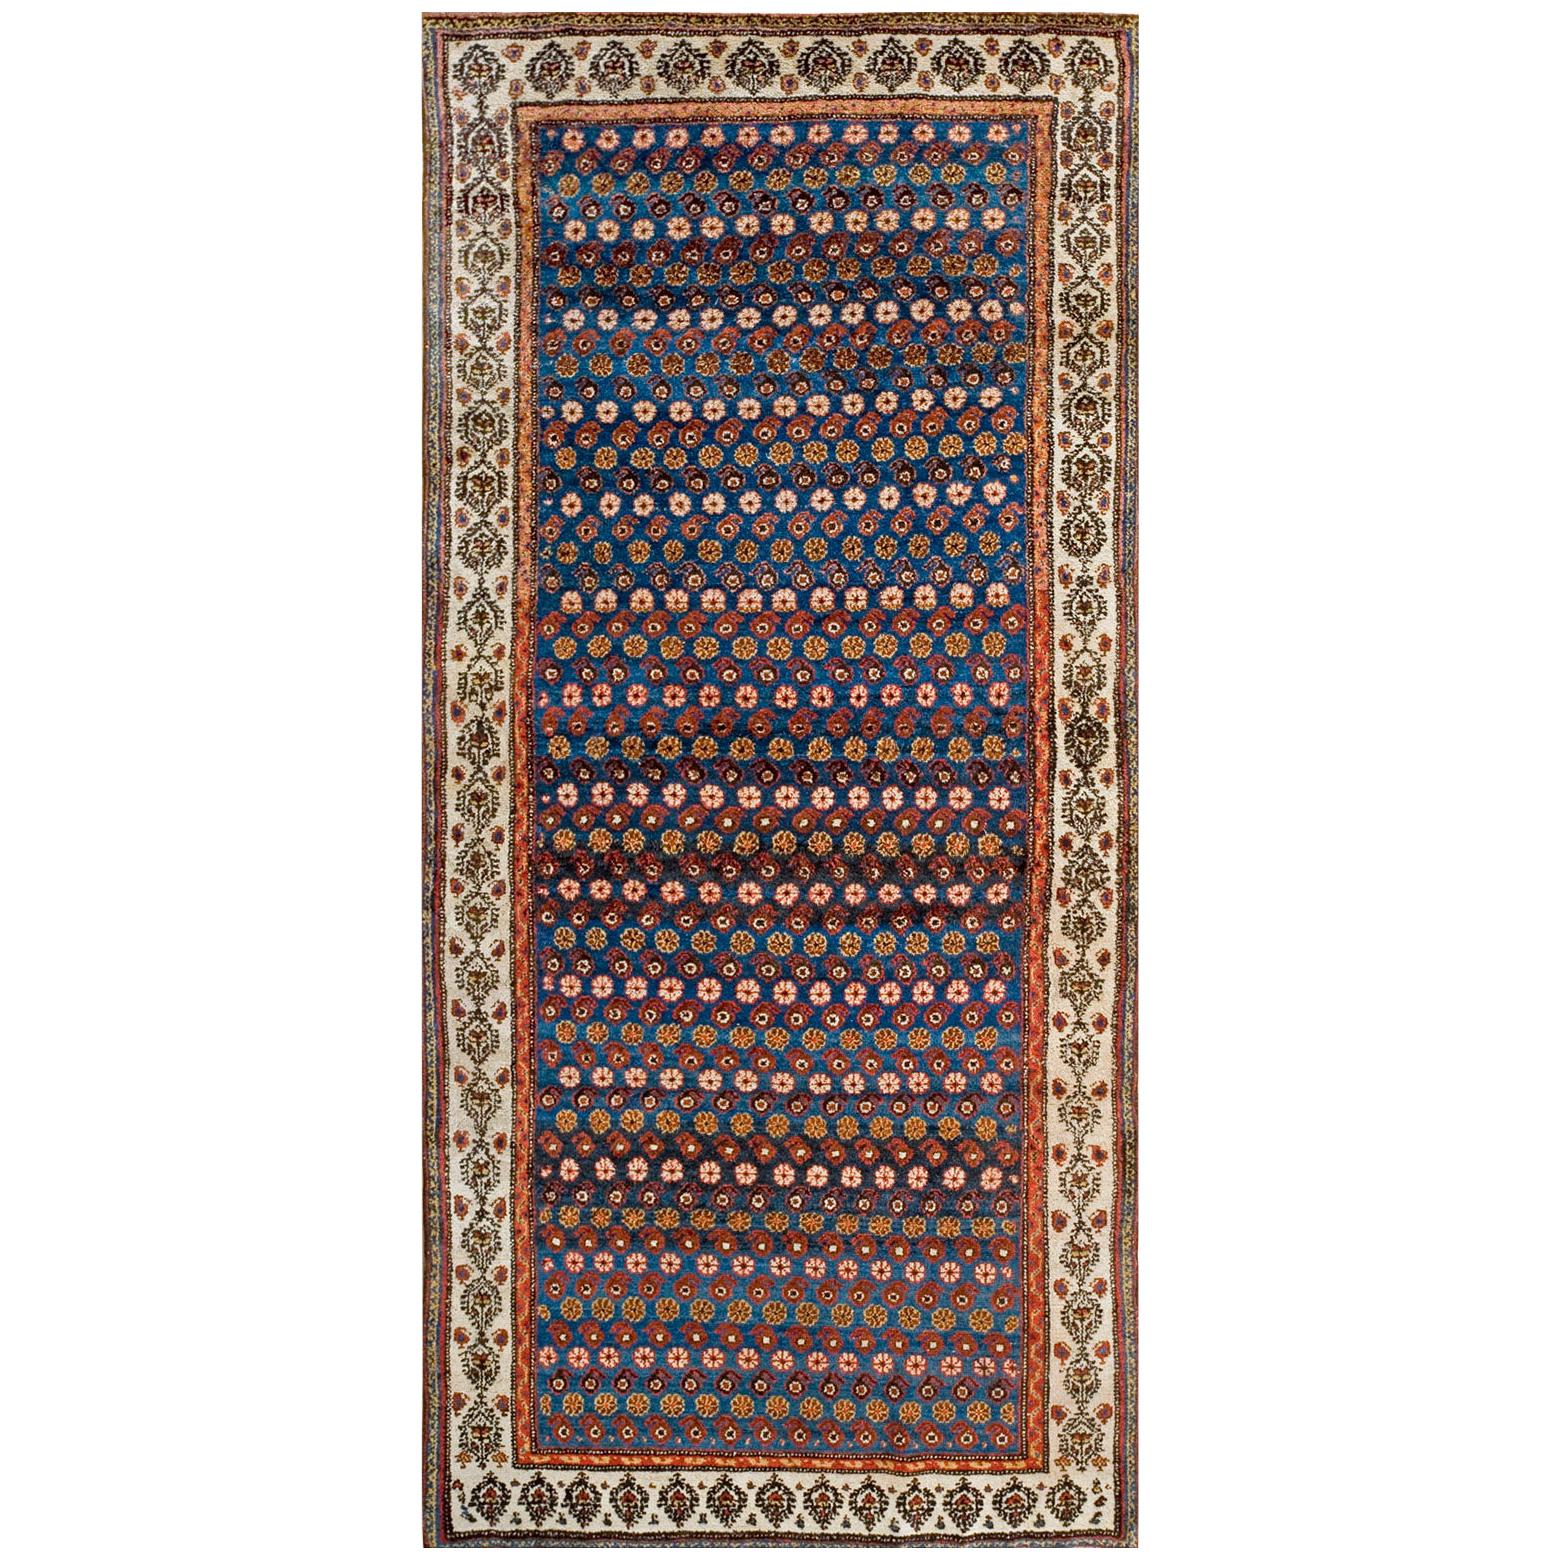 19th Century N.W. Persian Carpet ( 4'2" x 8'7" - 127 x 262 )